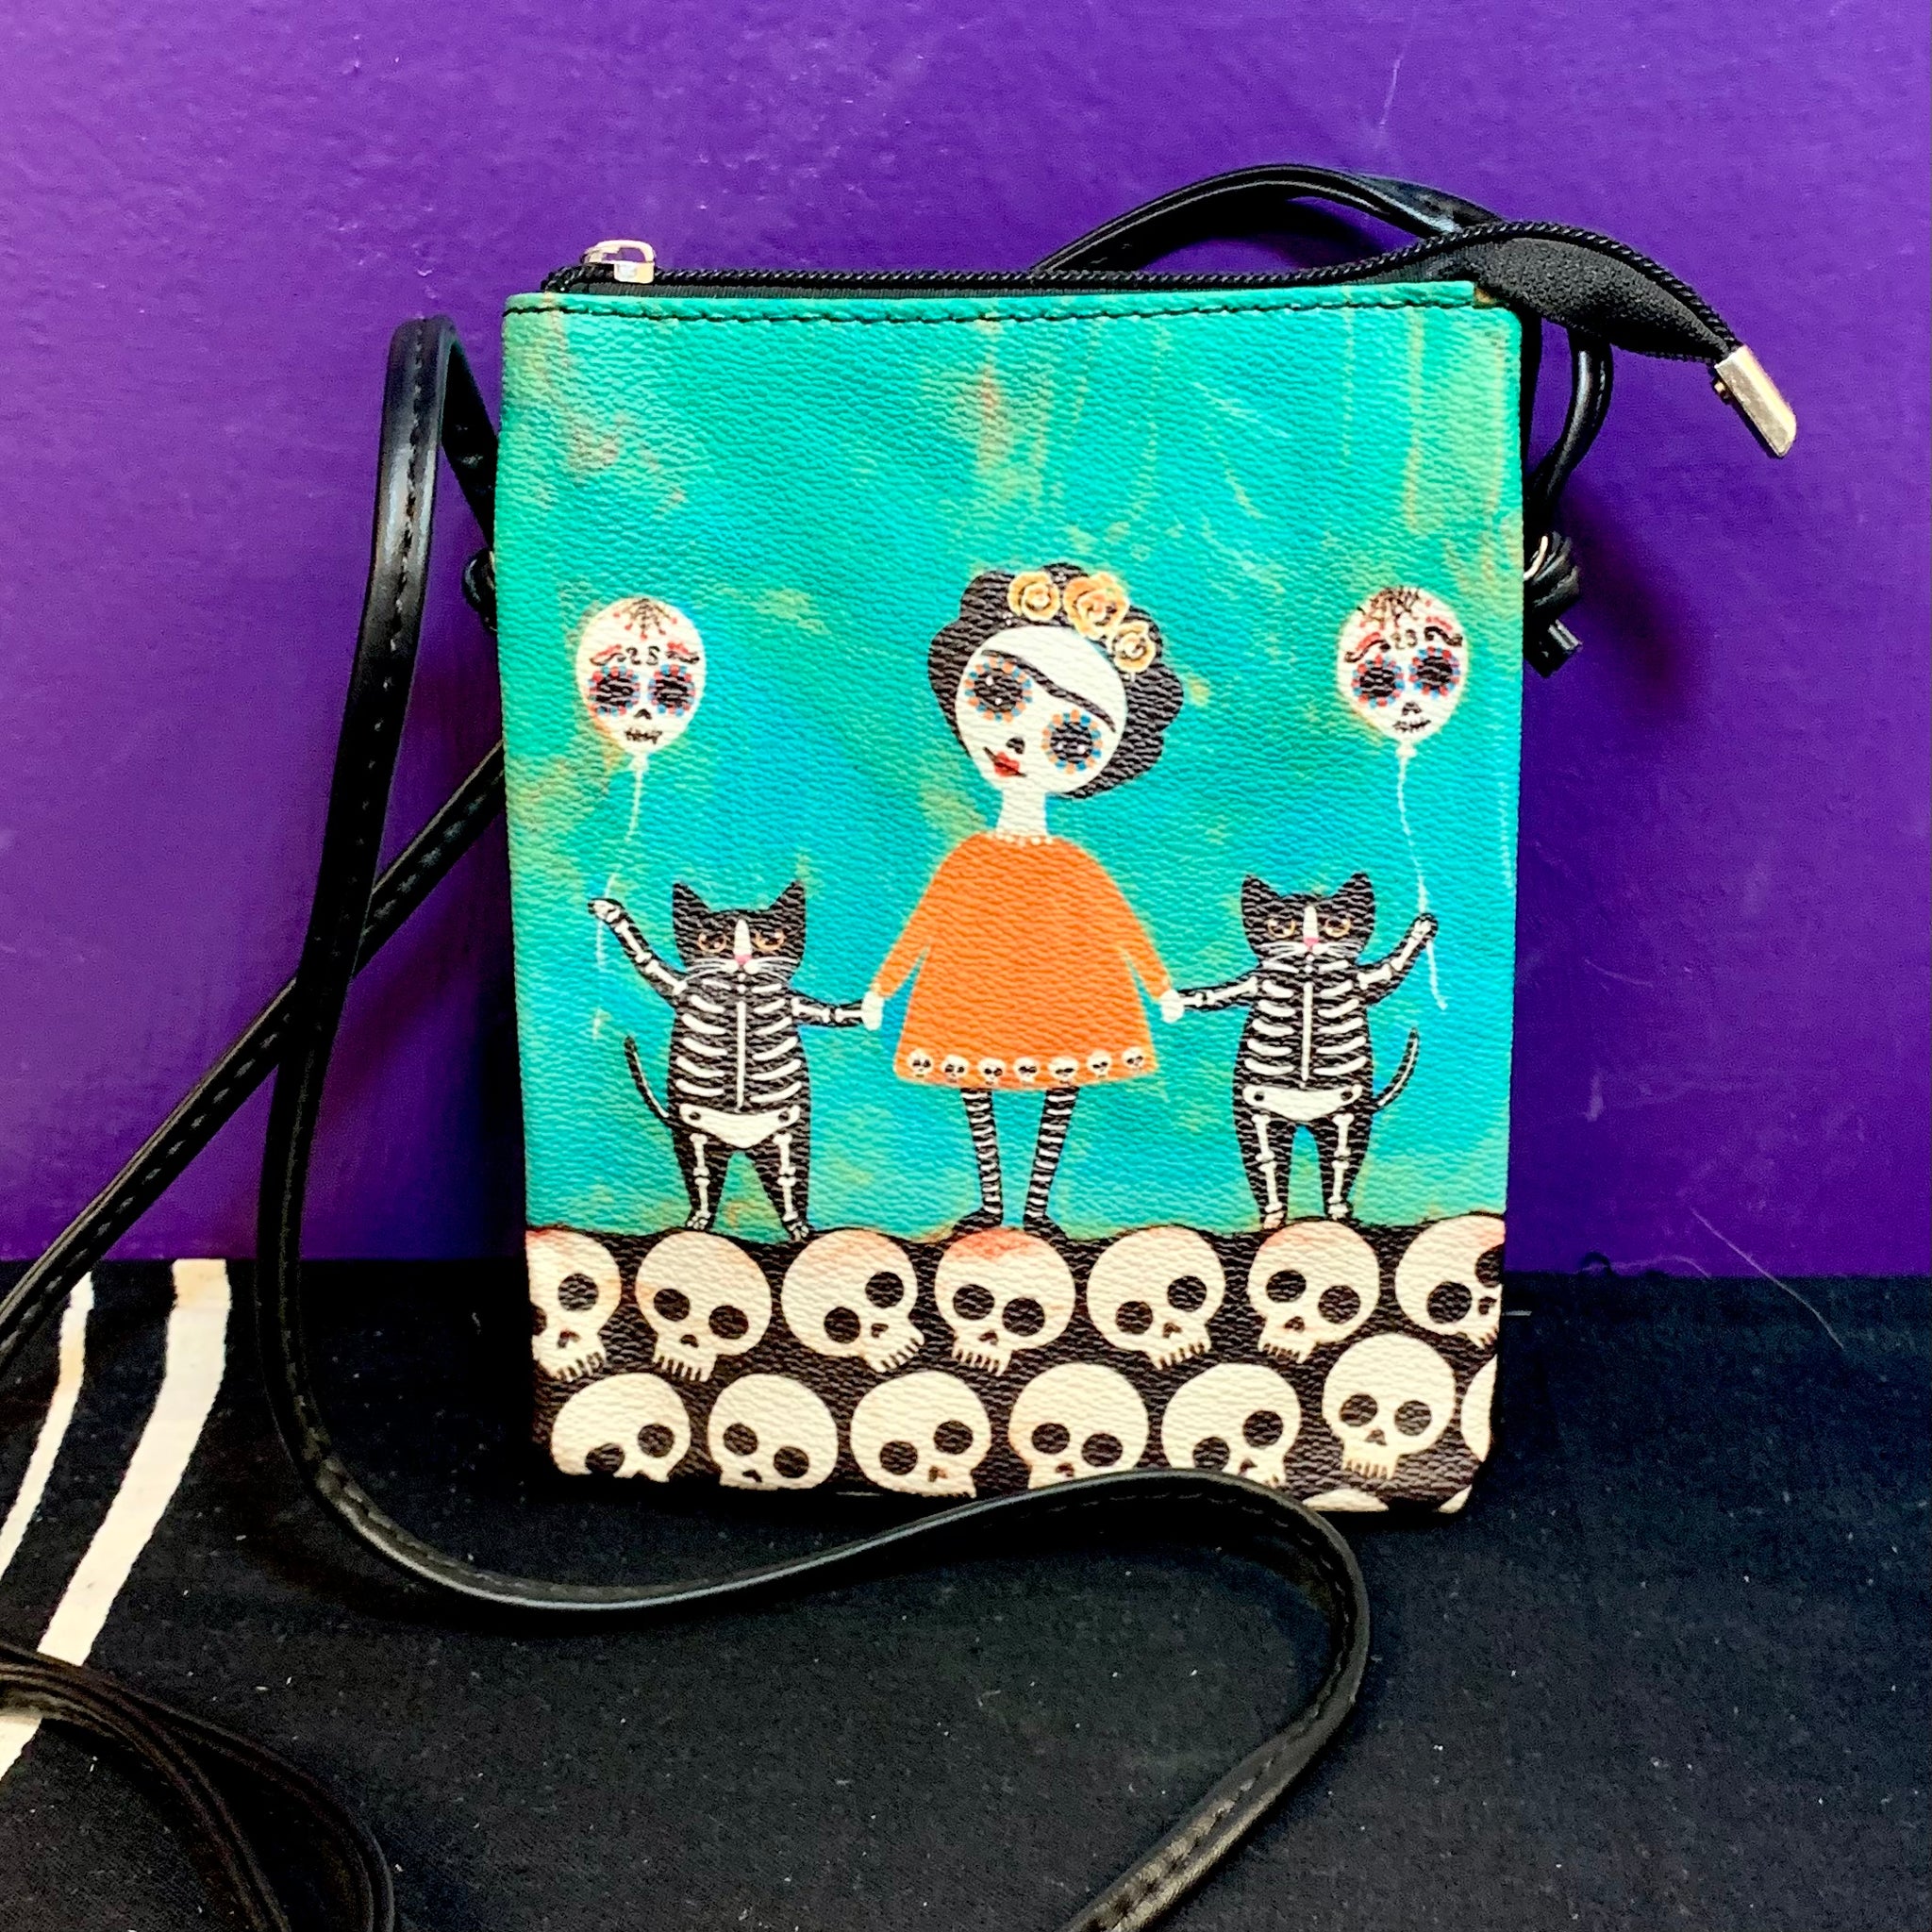 Purse / Crossbody Bag - Skeleton Girl in Orange Dress with Cats